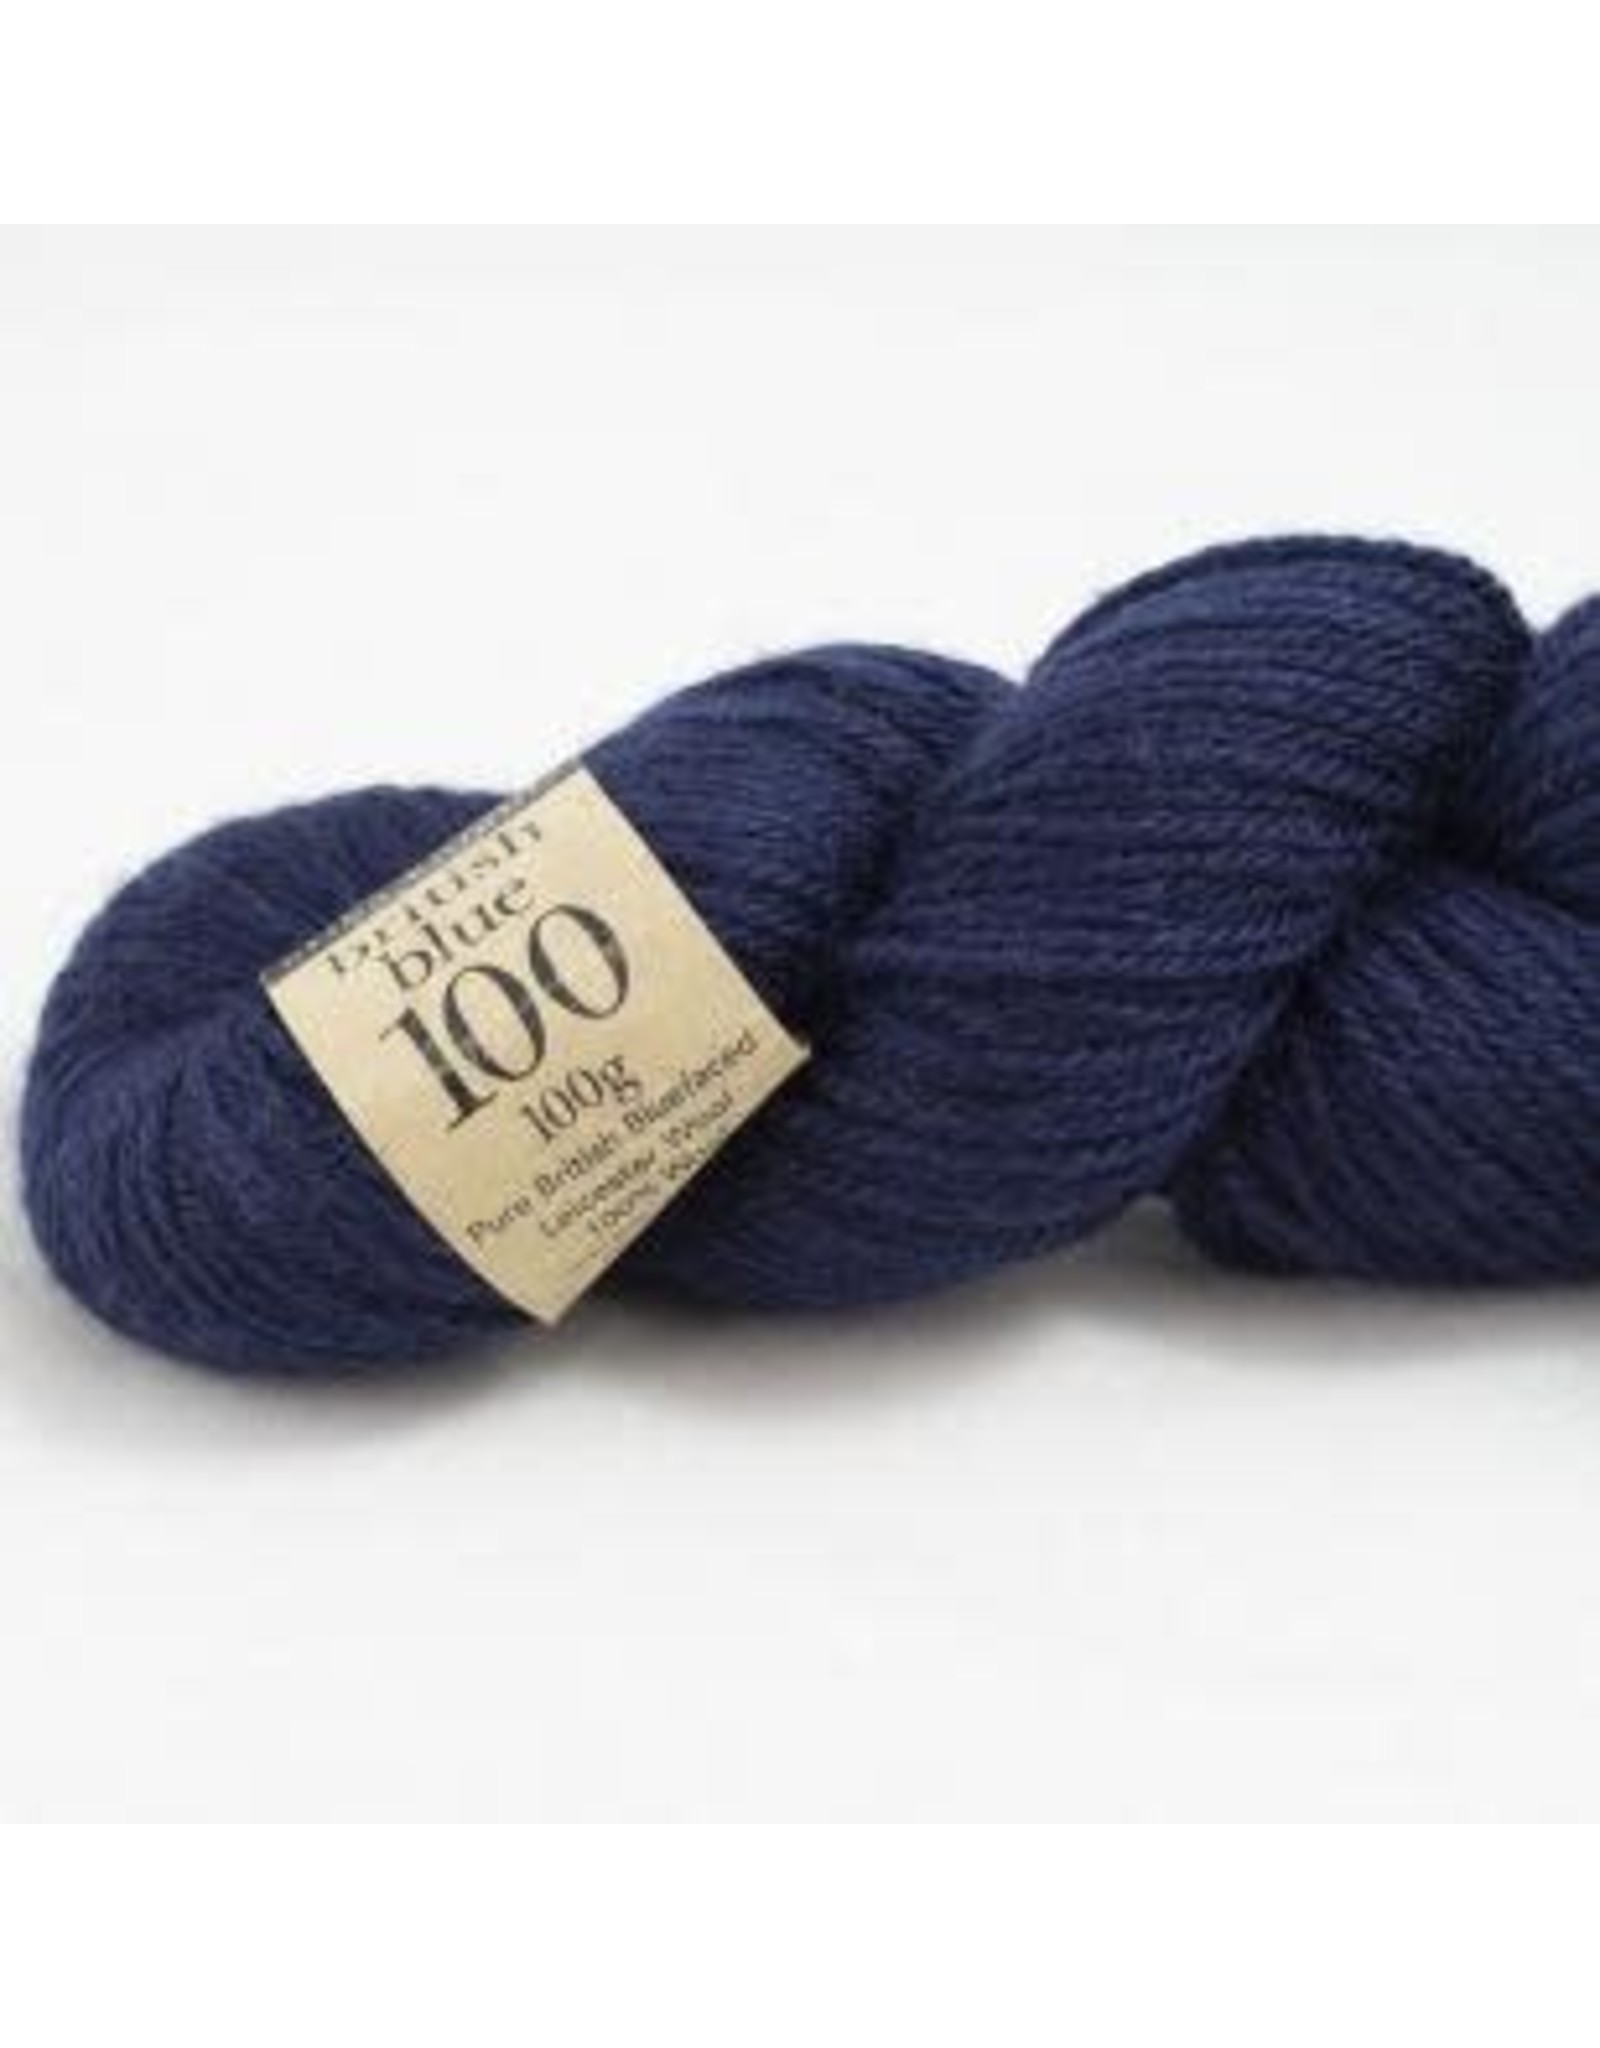 Erika Knight British Blue Wool van Erika Knight - 220 m - 100 g